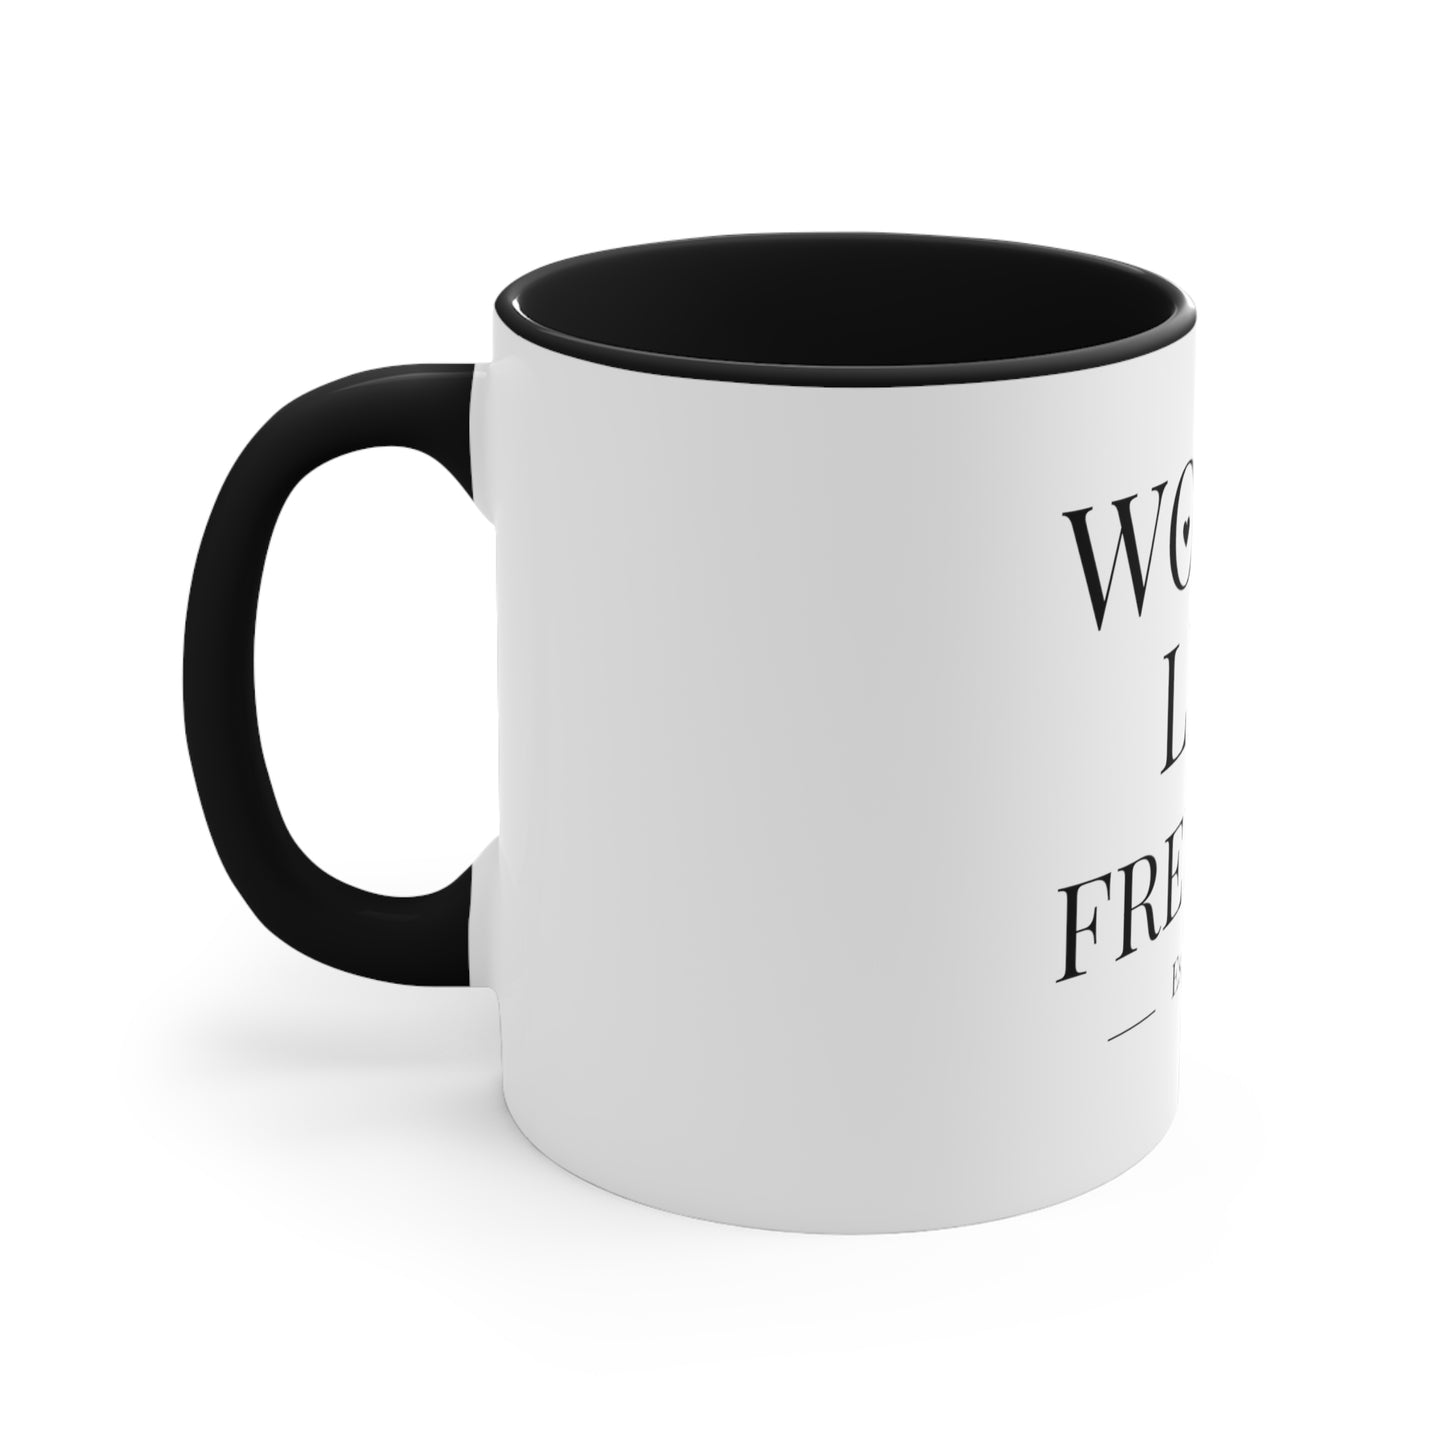 Women Life Freedom II- Accent Coffee Mug, 11oz